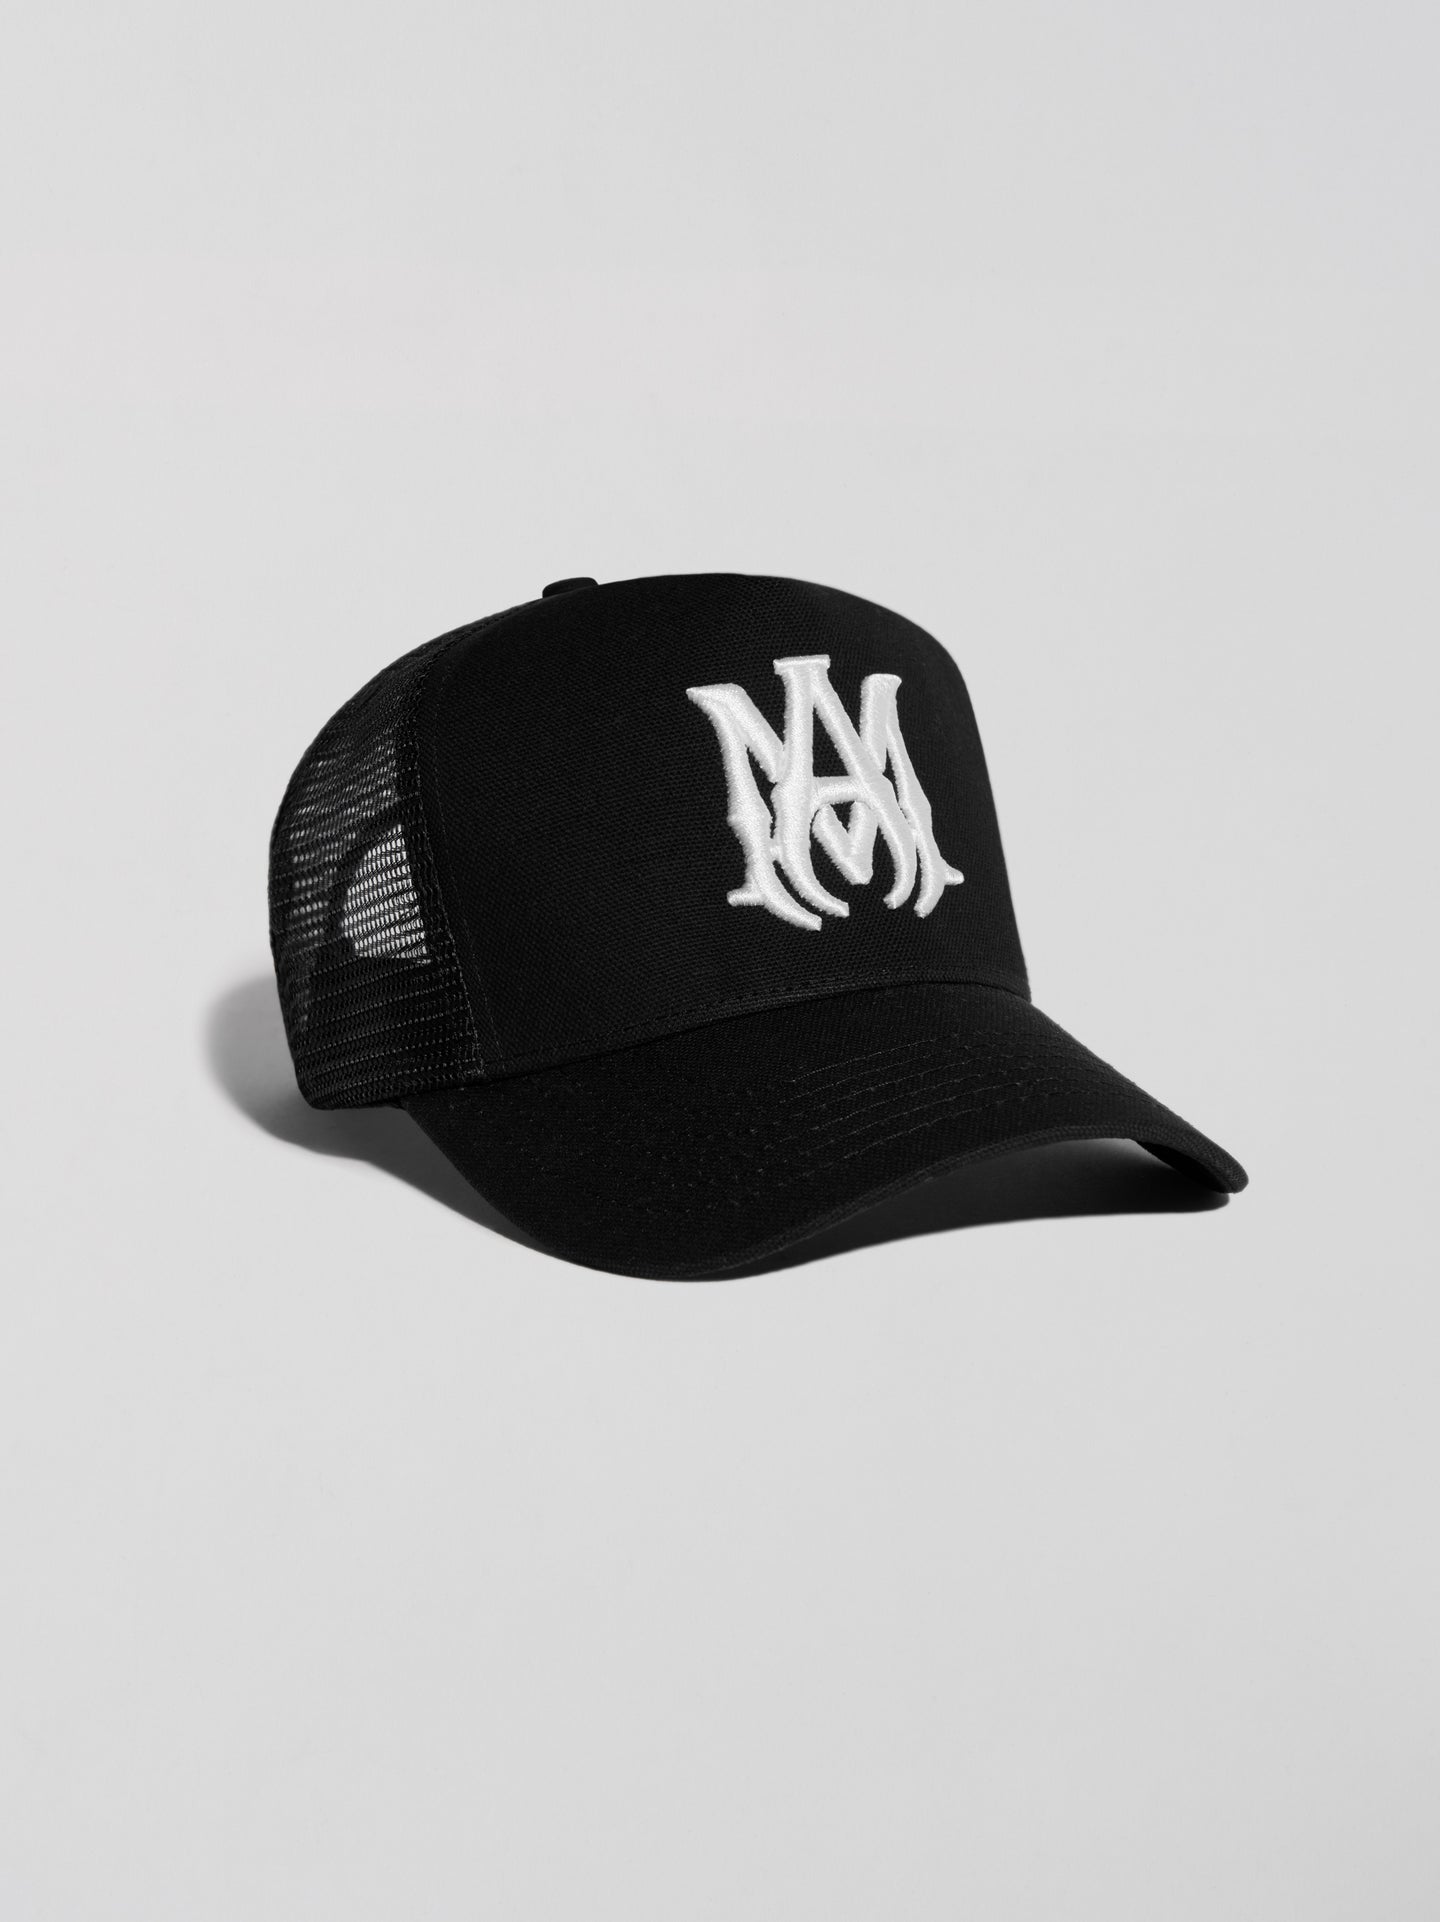 MA Logo Trucker Hat - Black/White